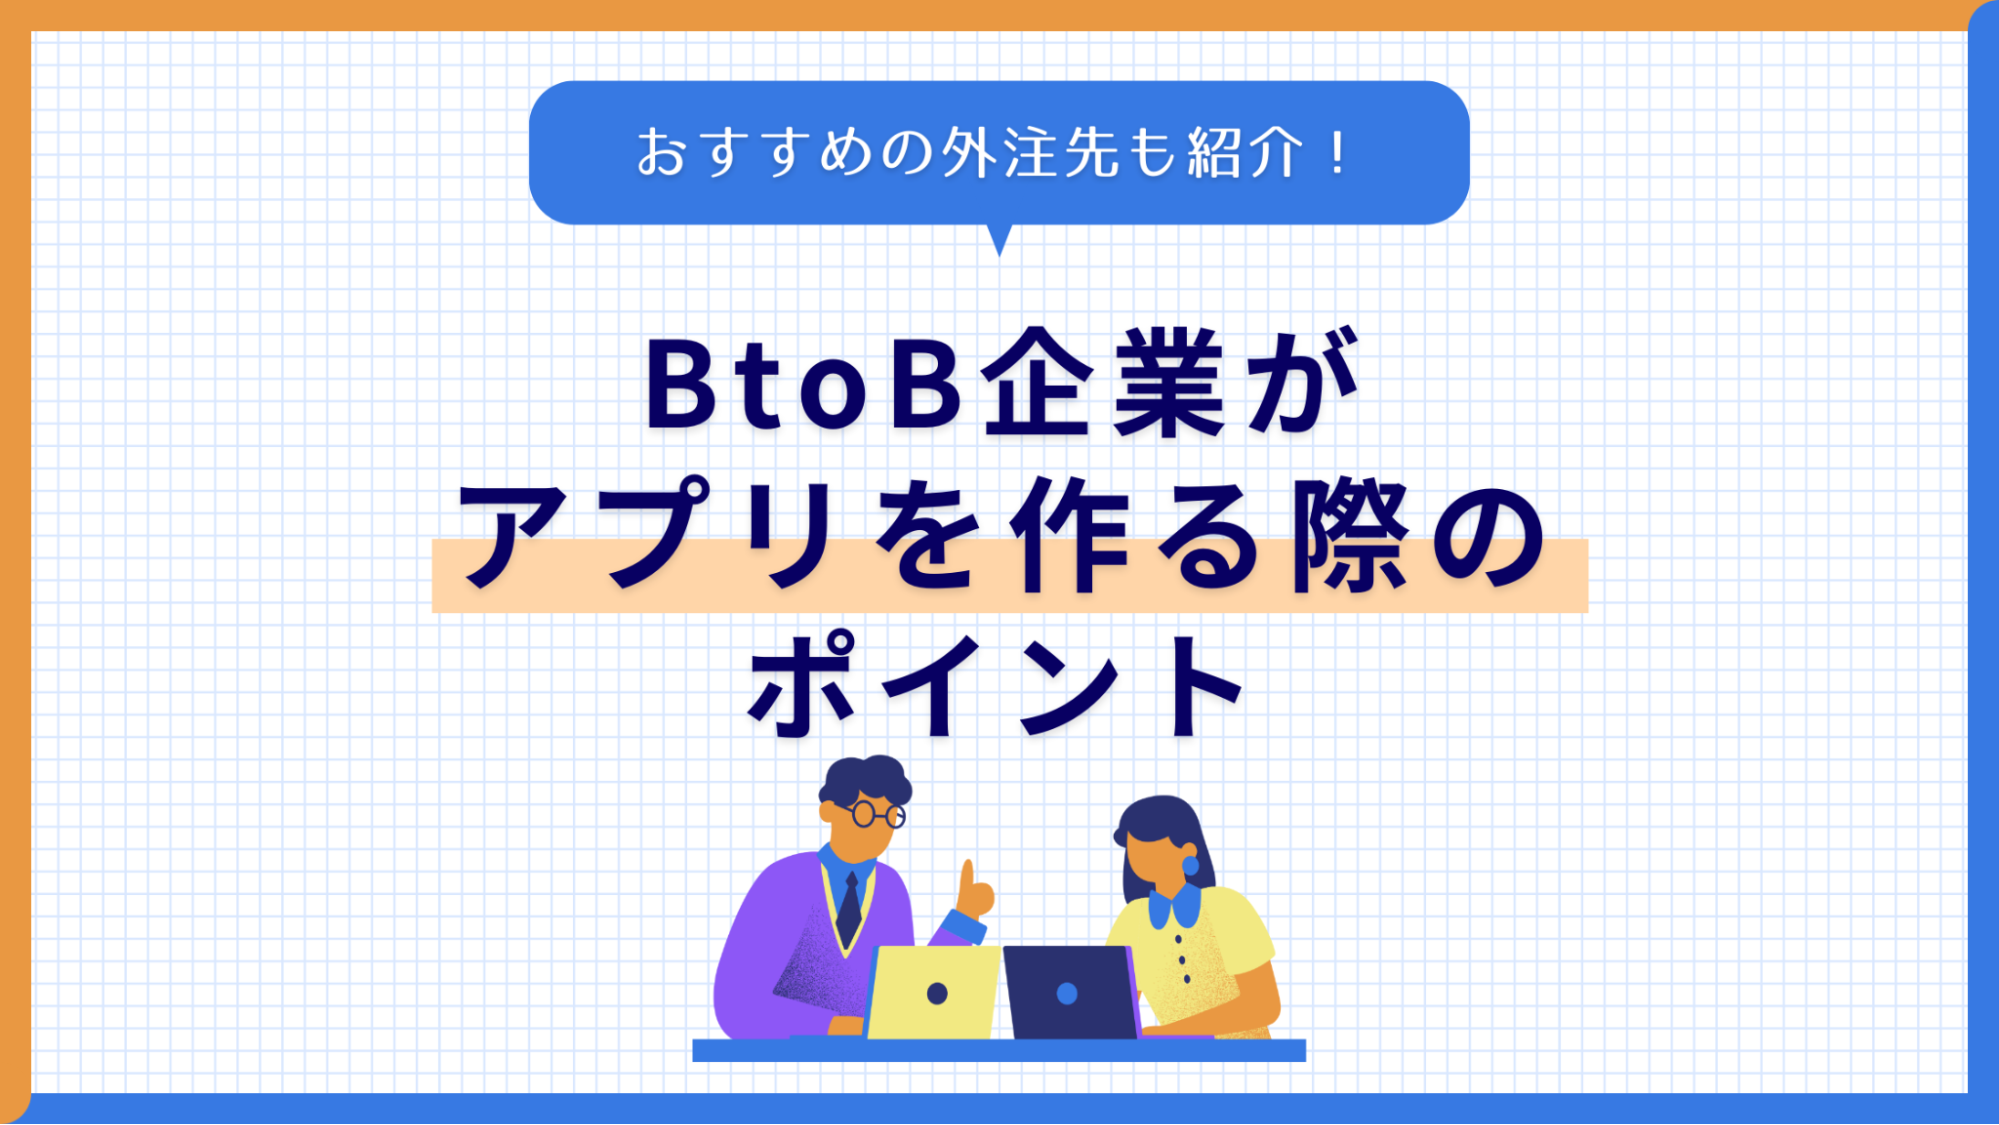 btob アプリ アイキャッチ